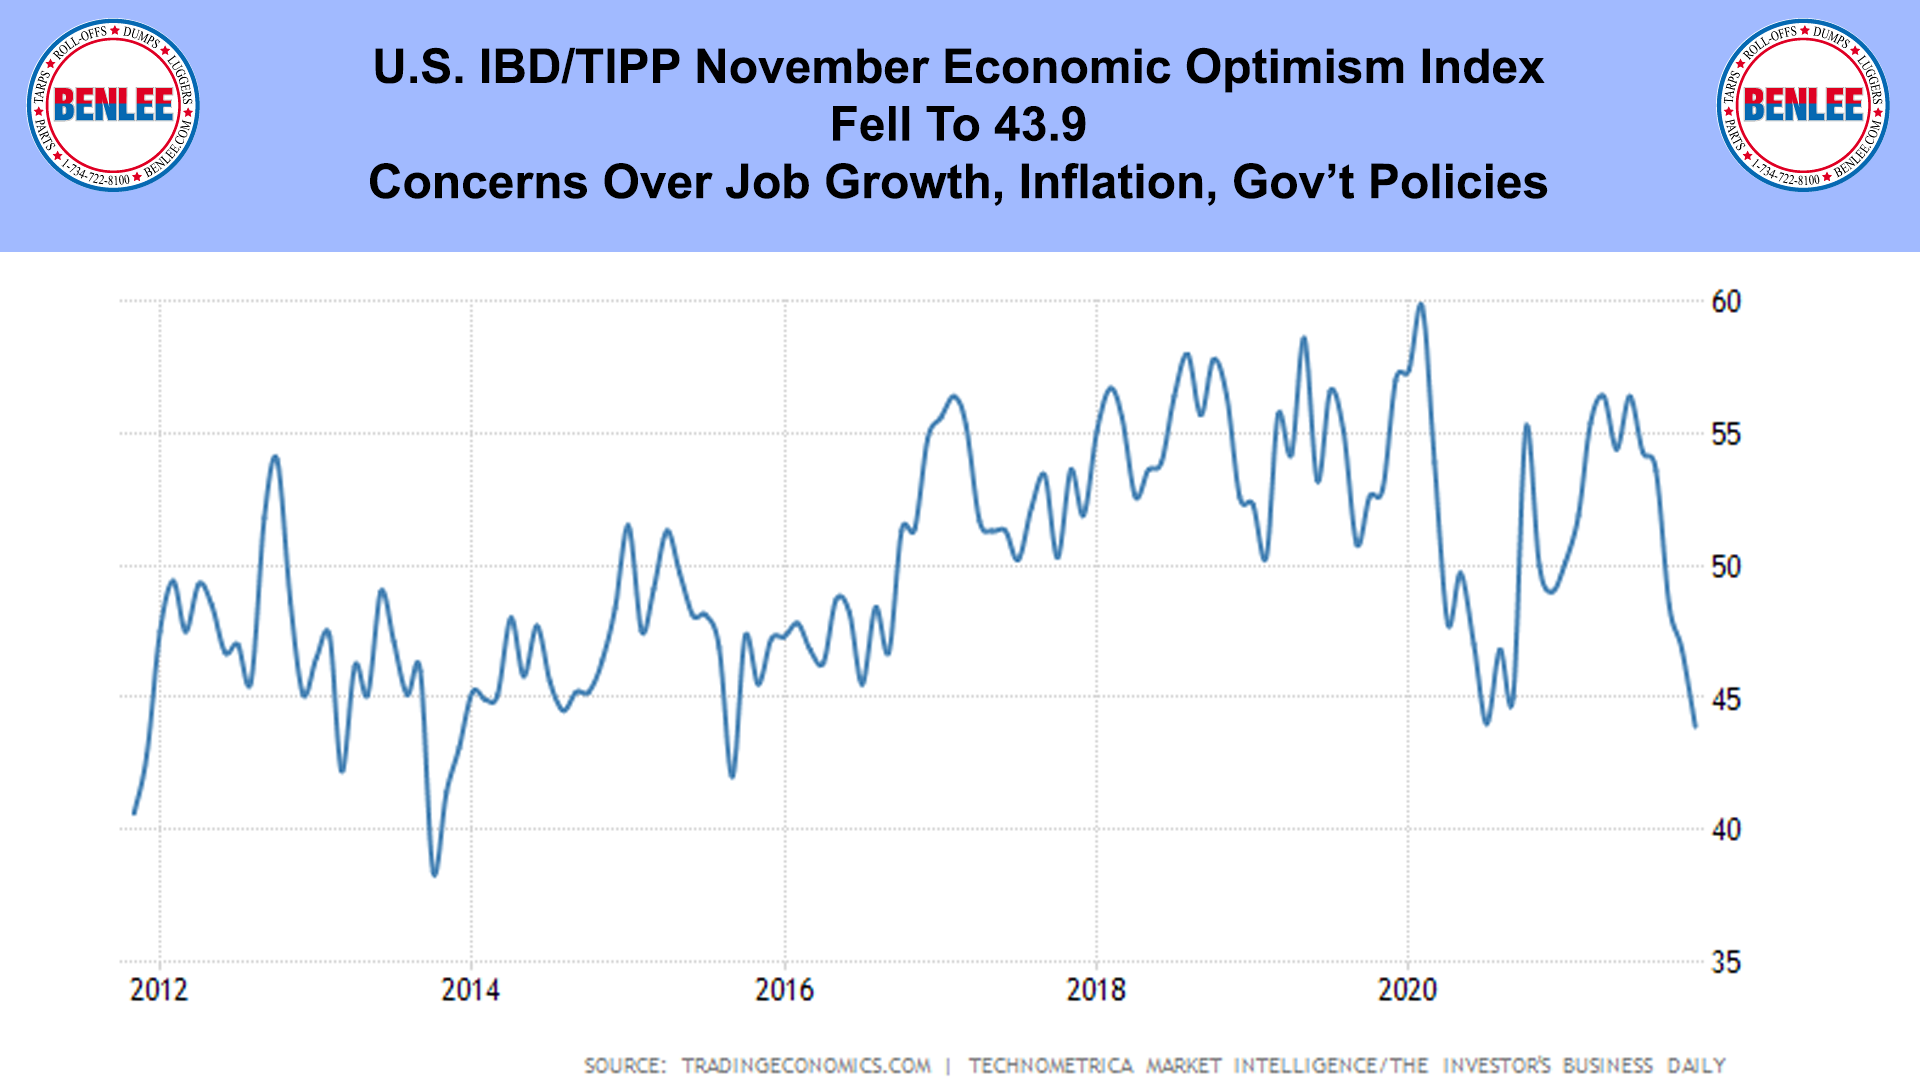 U.S. IBD-TIPP November Economic Optimism Index